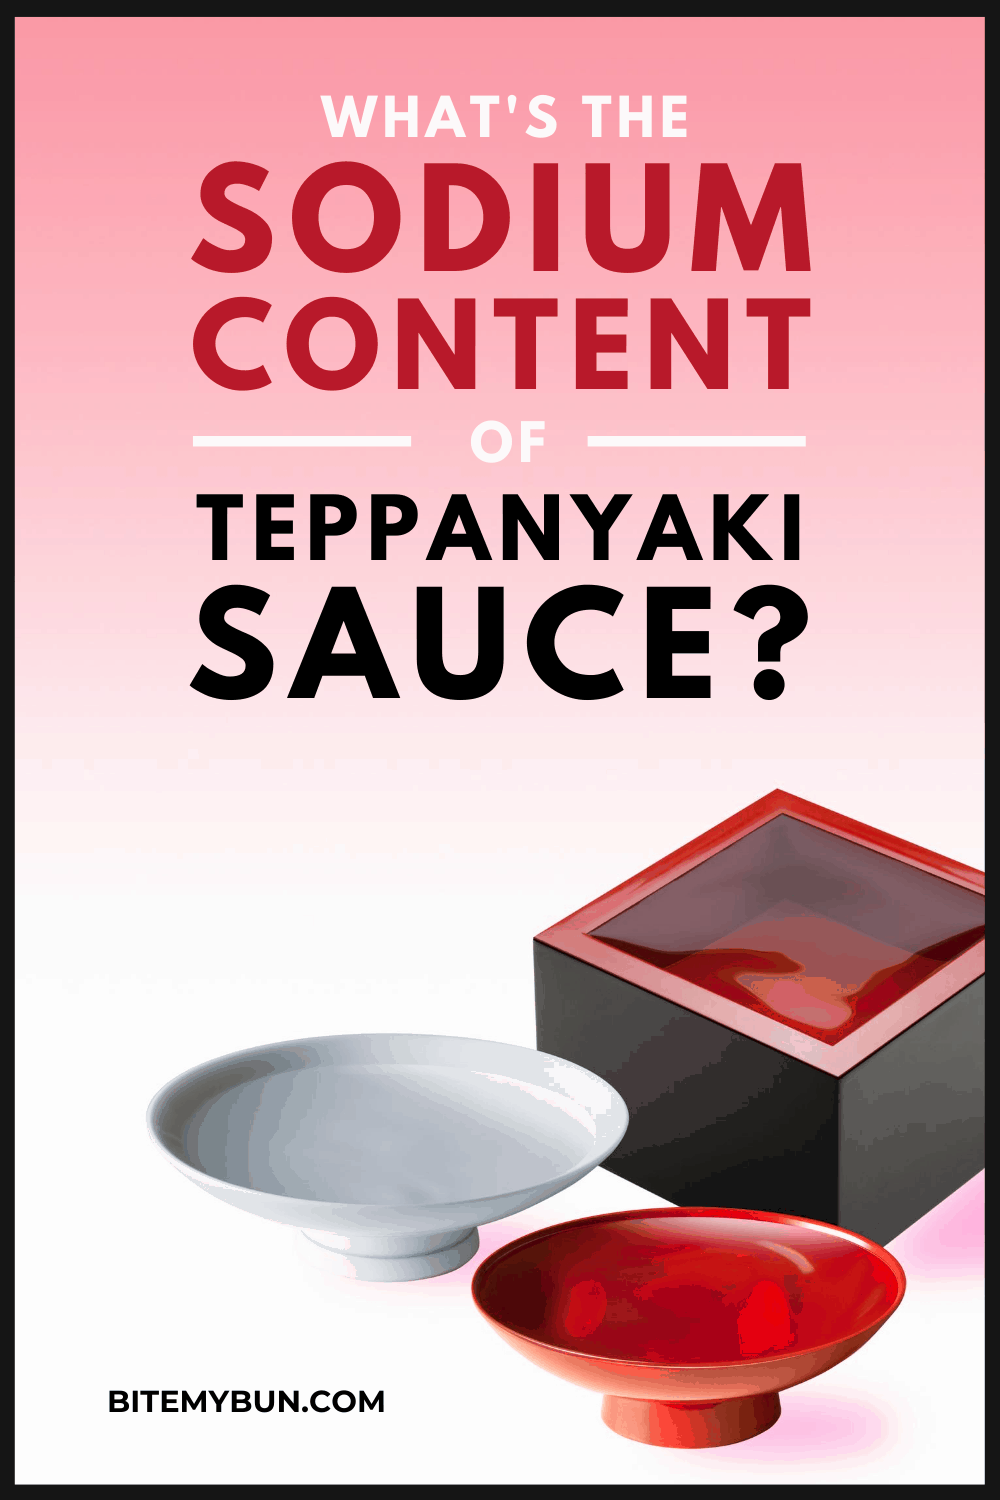 What’s the Sodium Content of teppanyaki sauce?